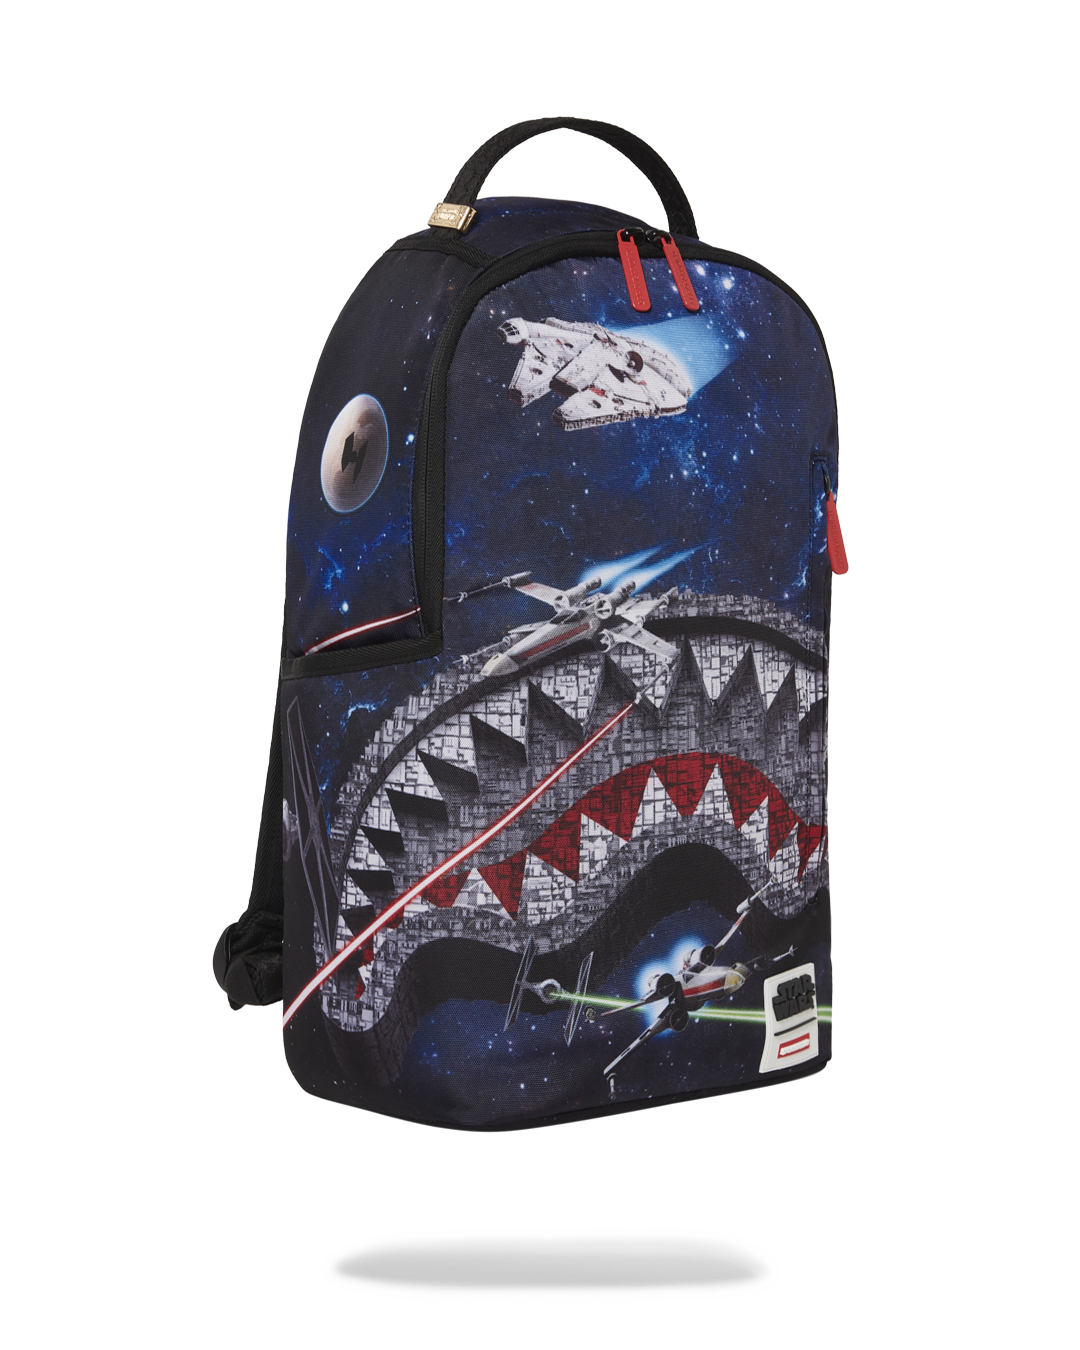 shark backpack sprayground